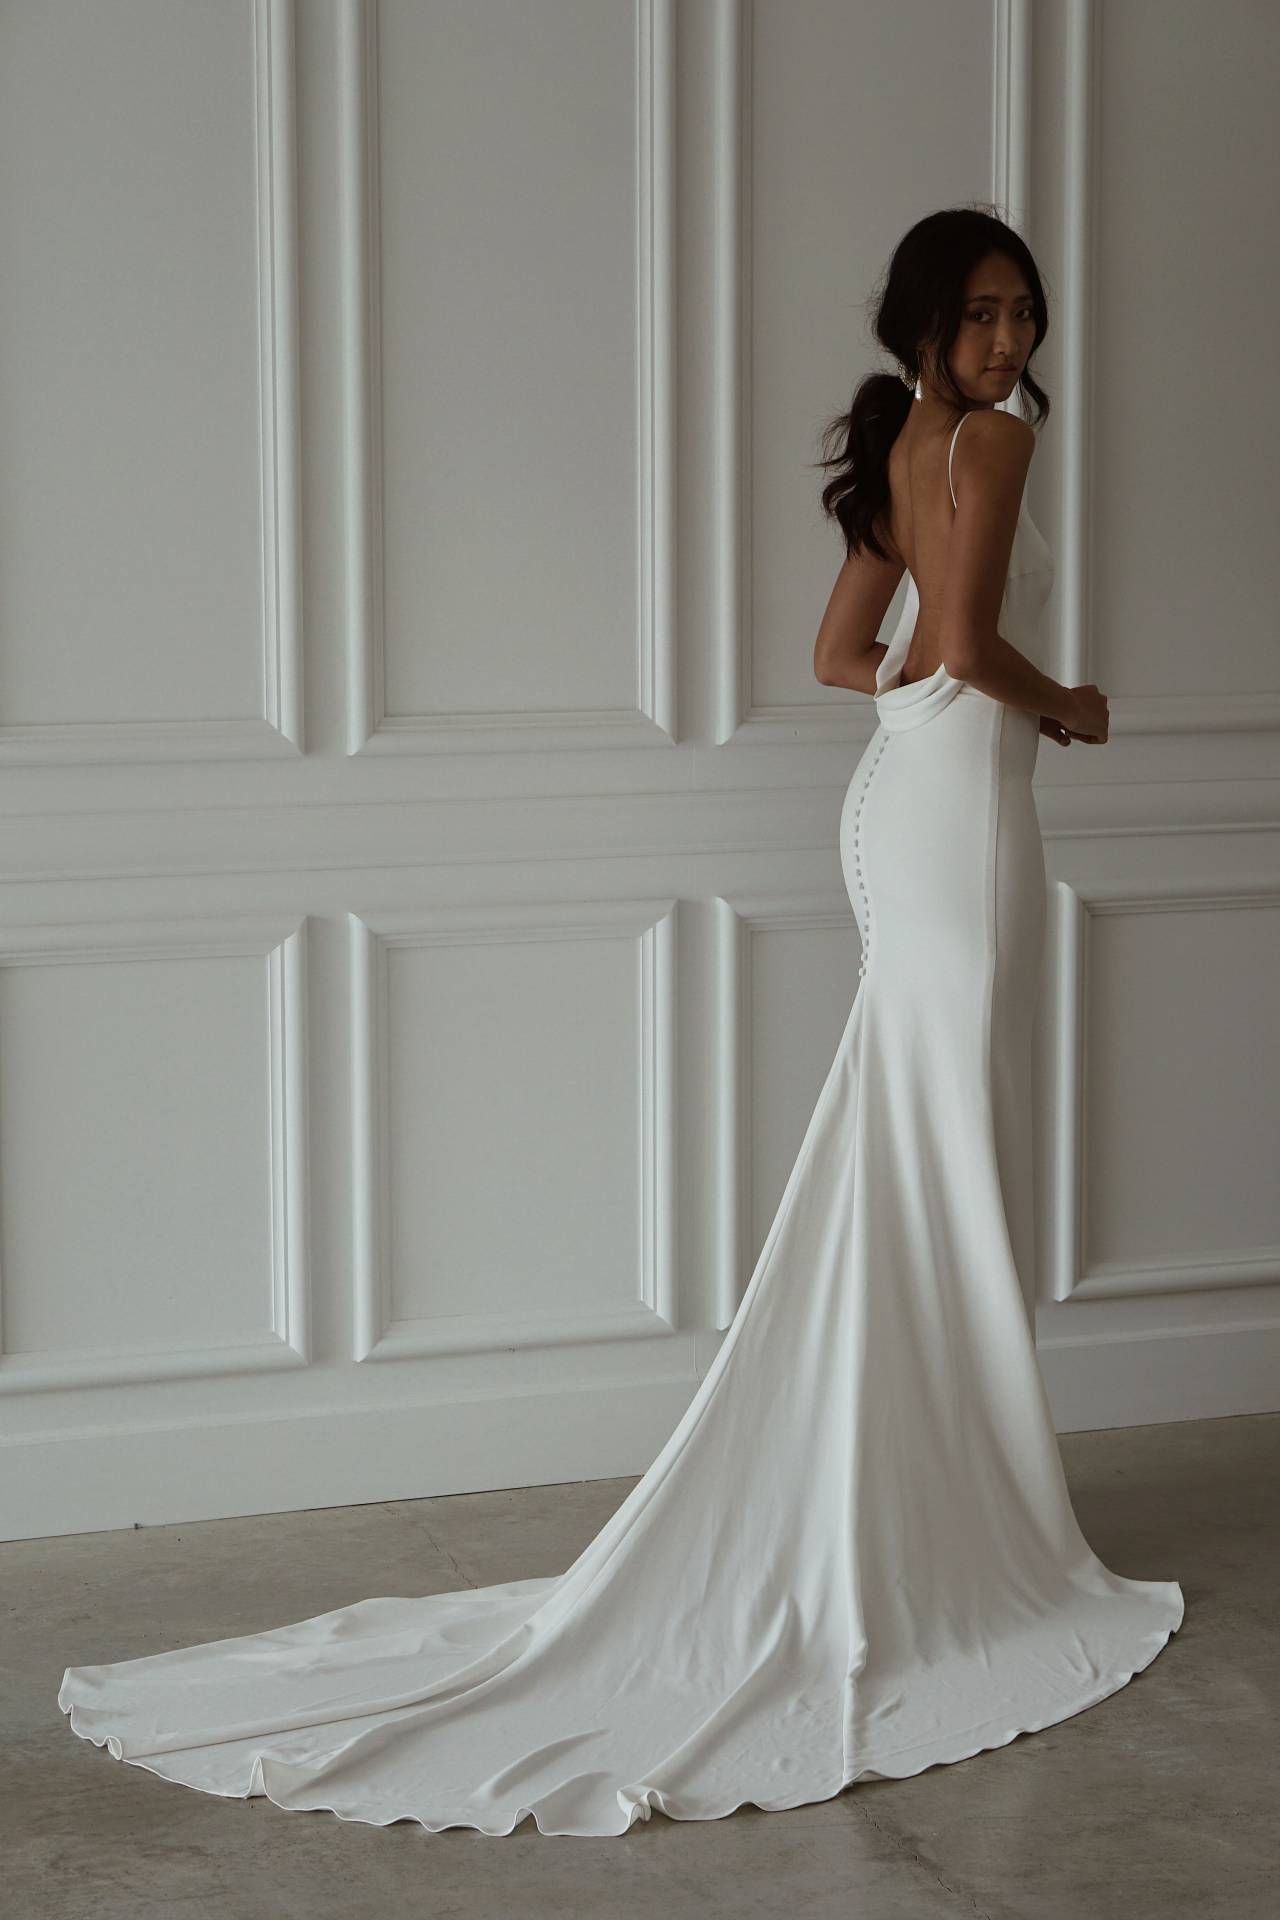 blanc-de-blanc-bridal-boutique-pittsburgh-dress-wedding-gown-ARCHIE_MWL.jpeg